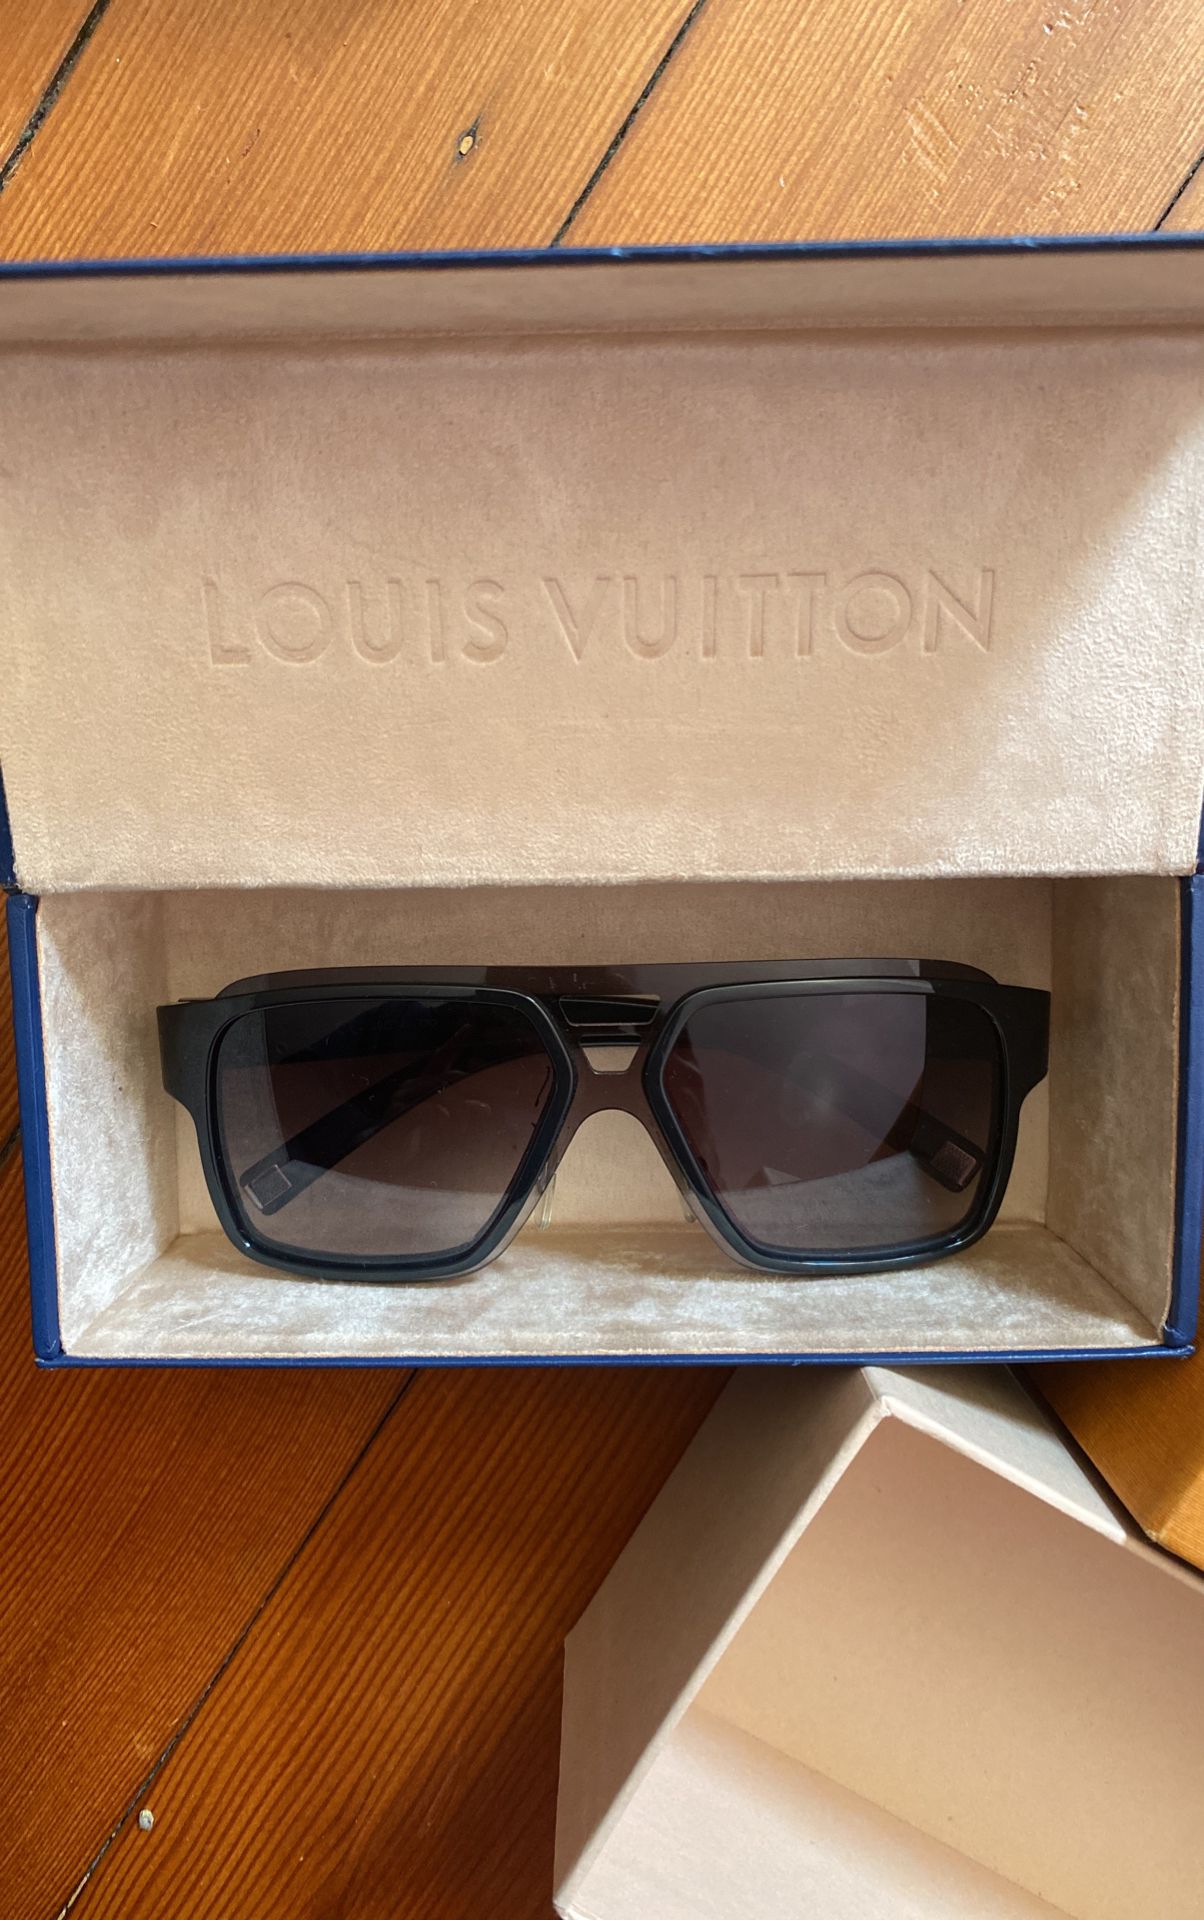 Louis Vuitton LV Authentic Sunglasses Eyeglasses Eyewear for Sale